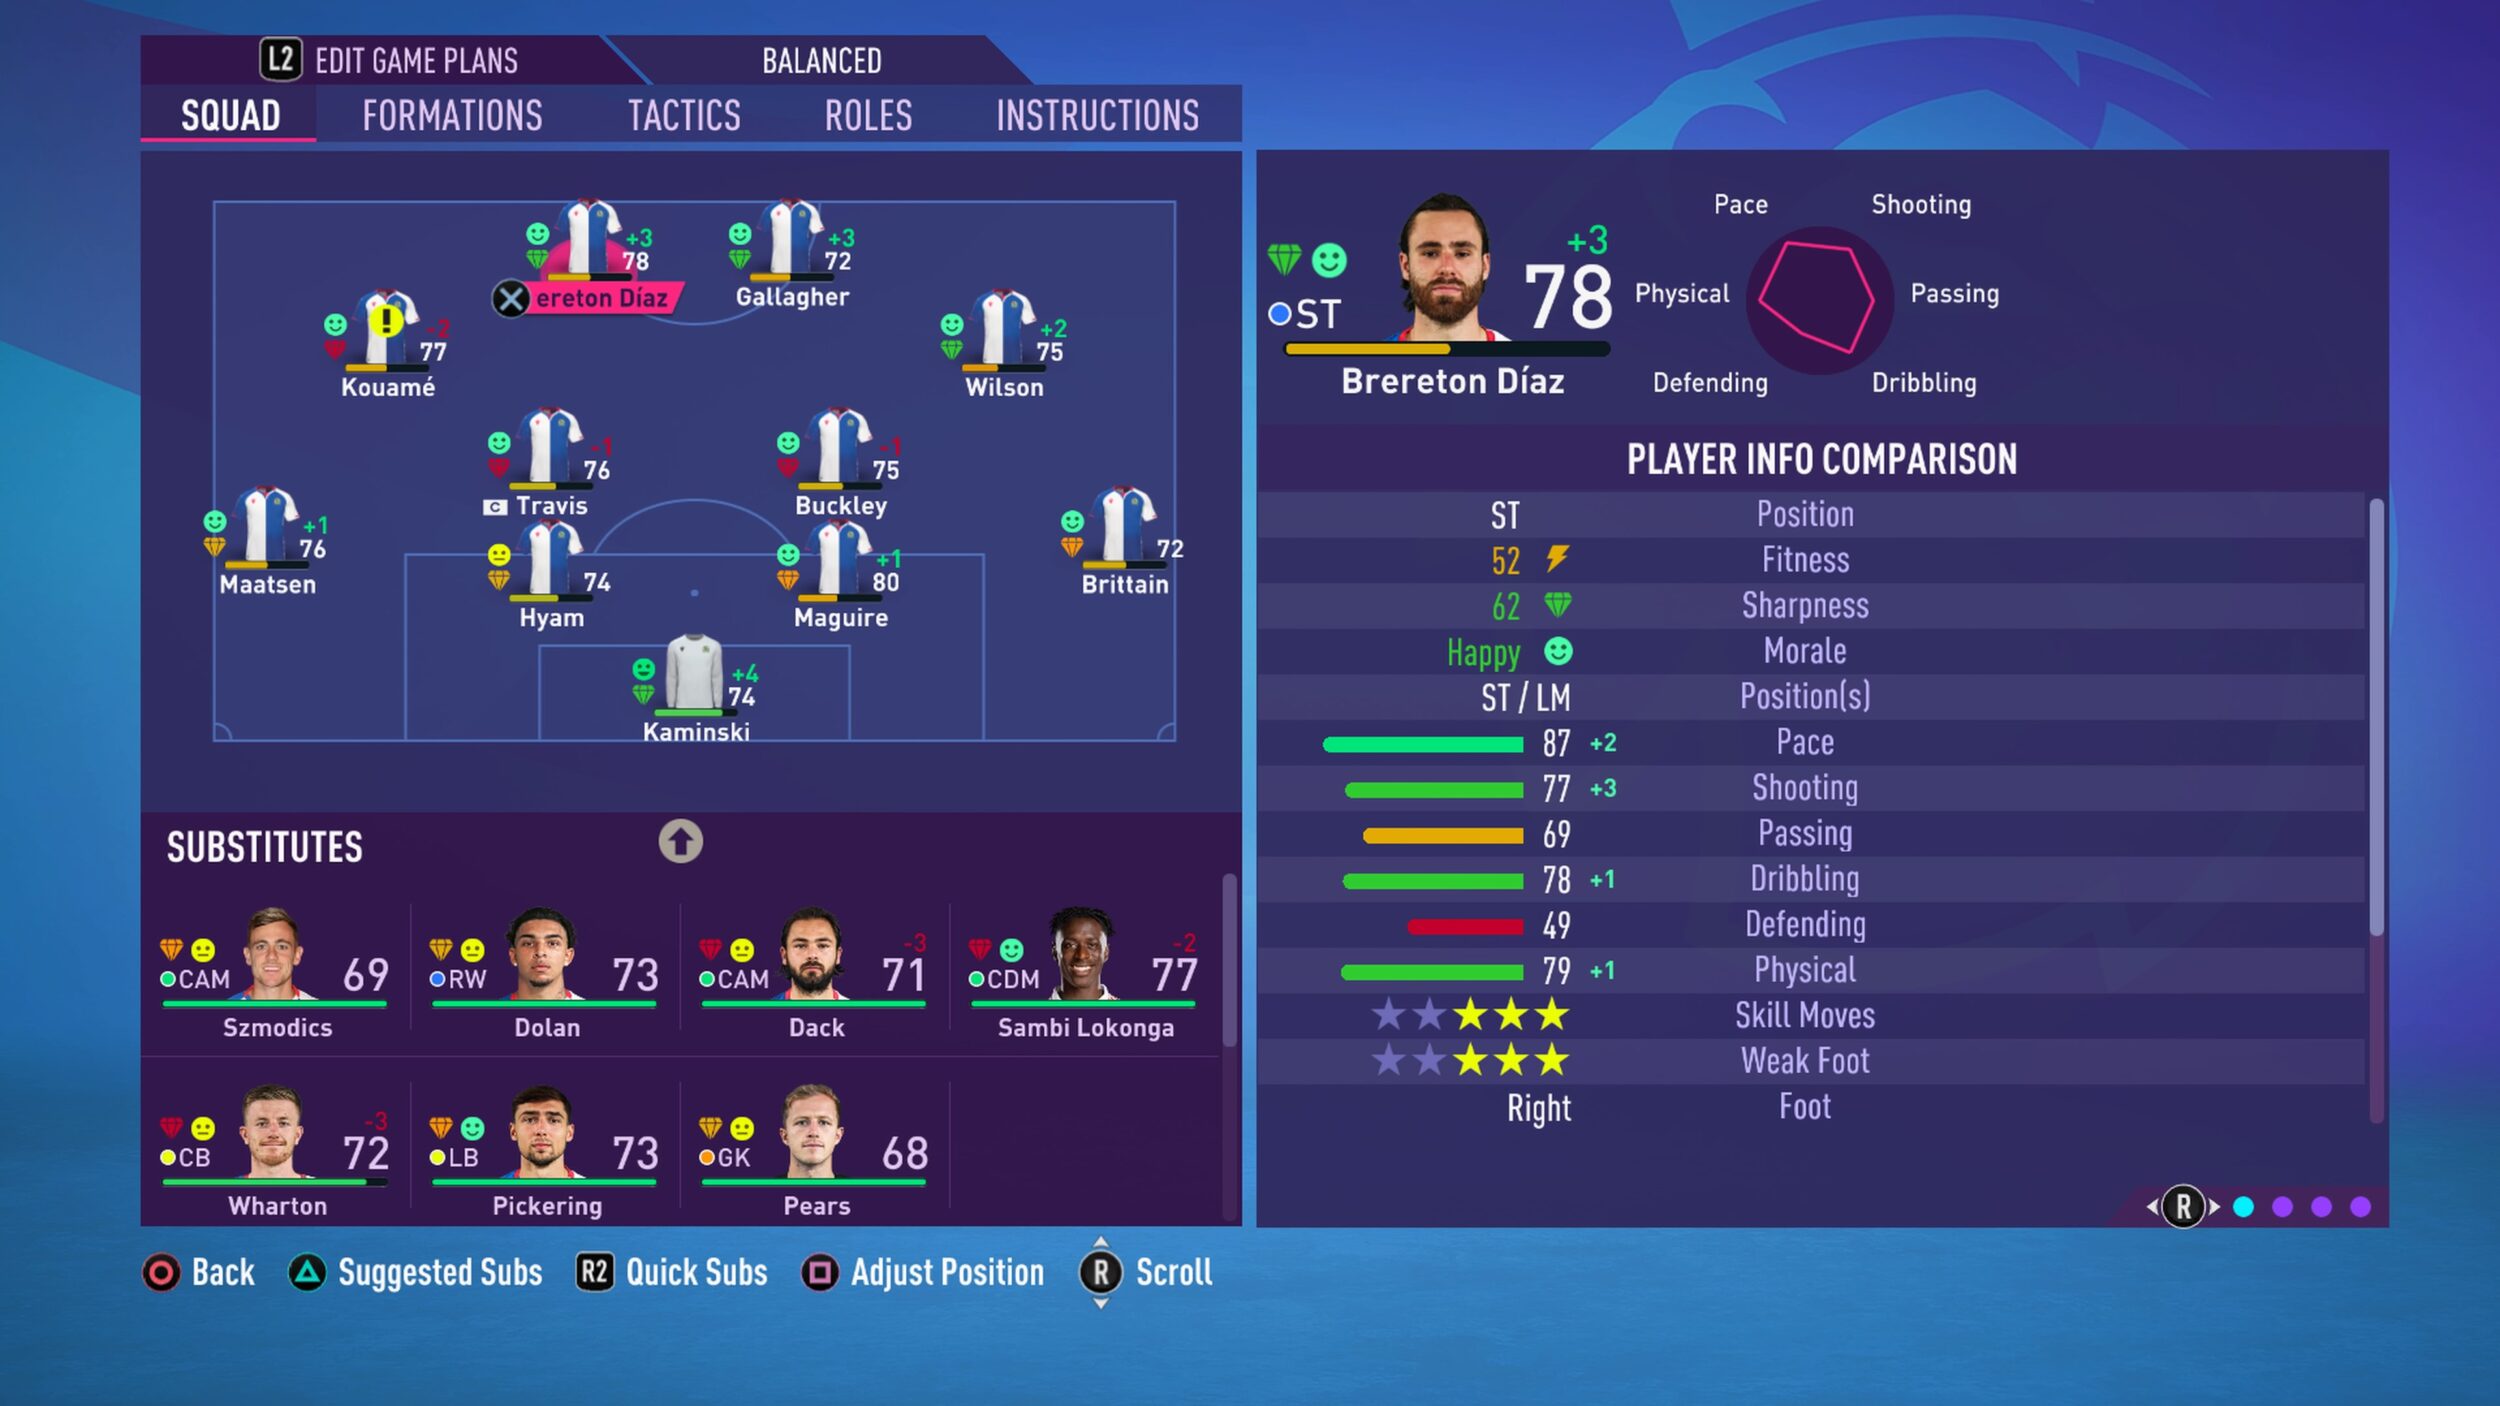 FIFA 23 Rest of World - Career Mode